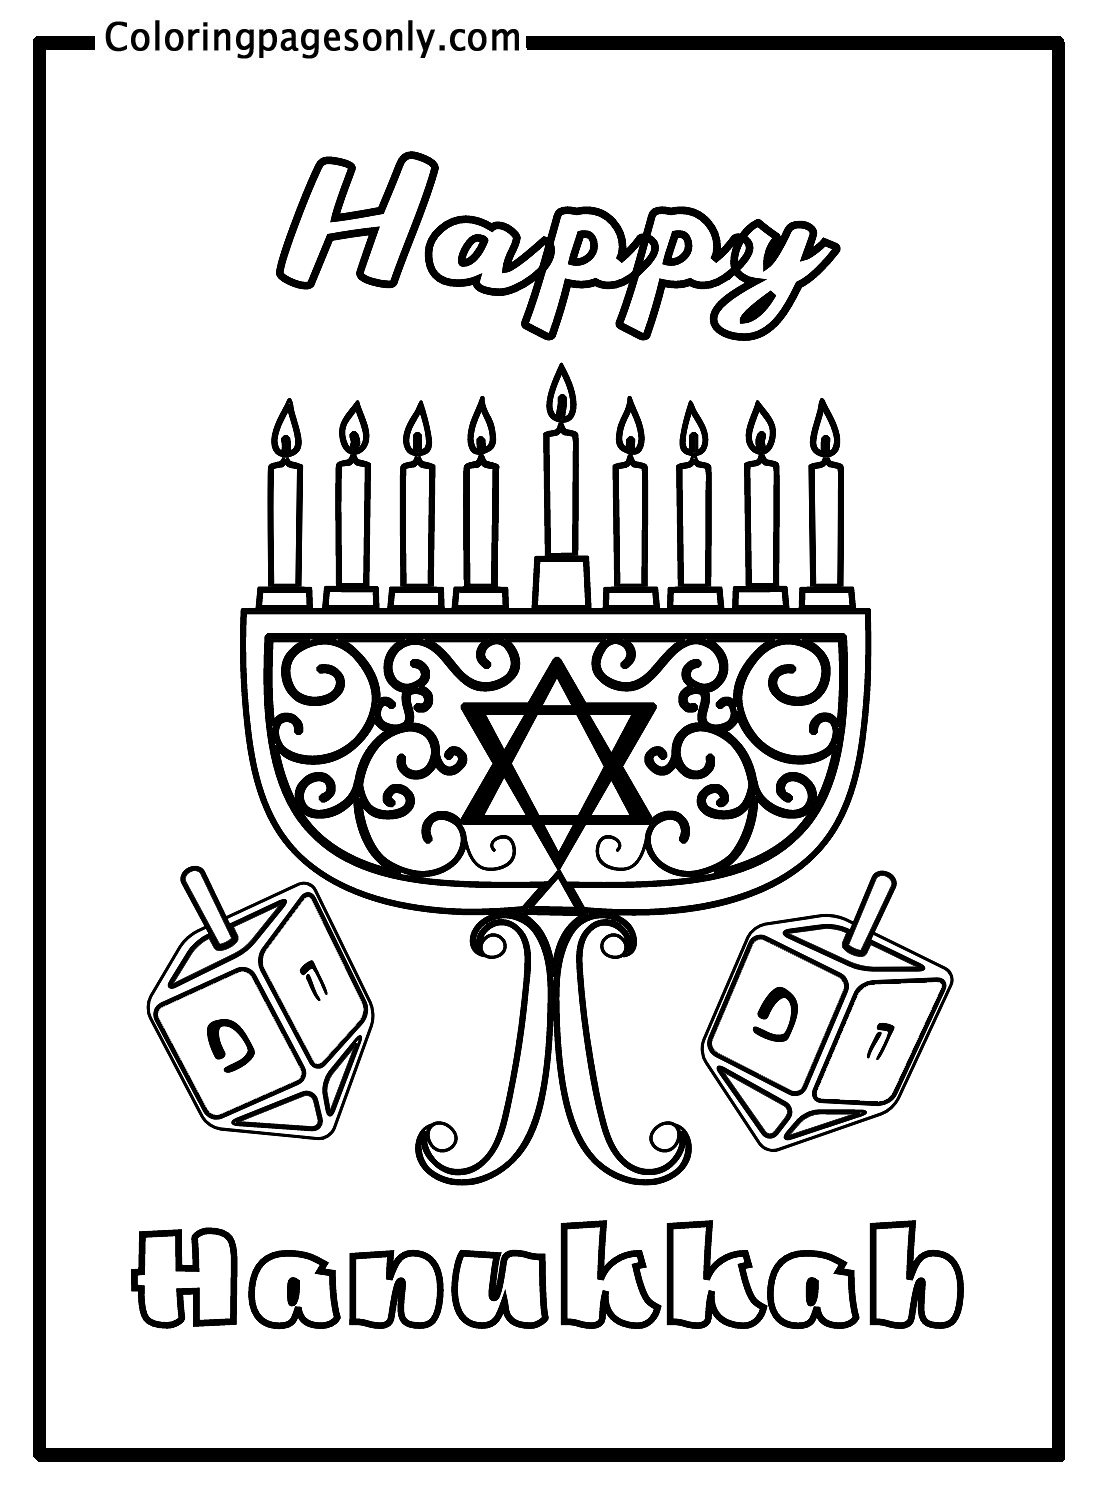 Happy Hanukkah Picture Coloring Pages